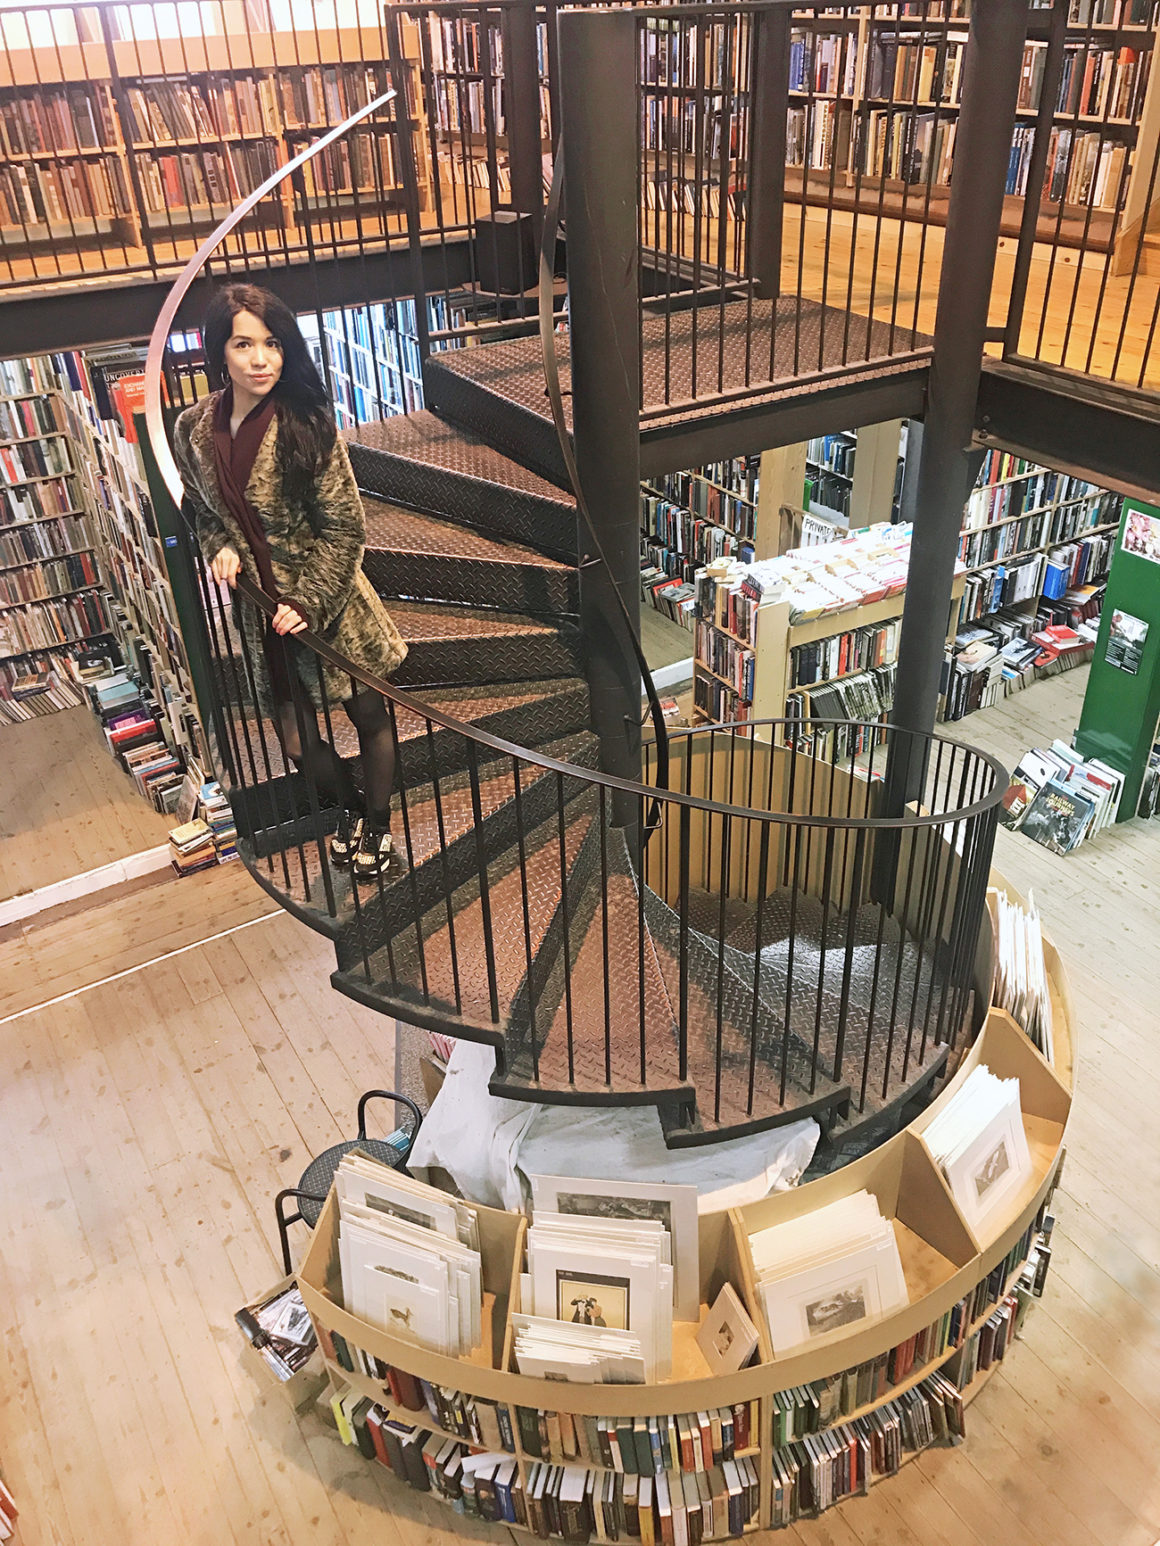 Leakey's Bookshop in Inverness, Scotland